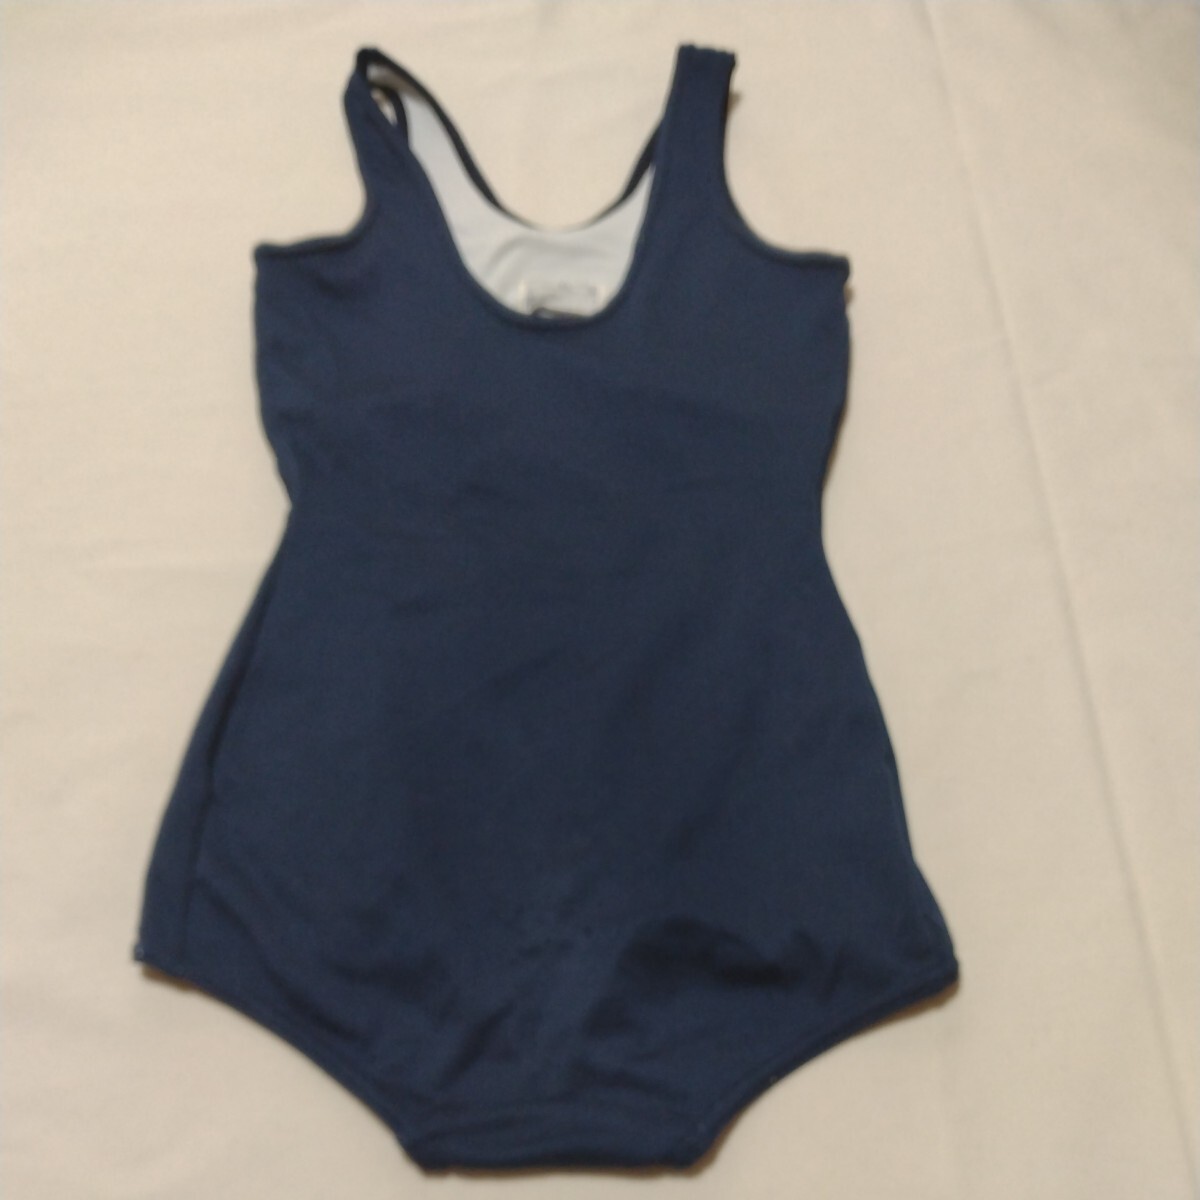  One-piece купальный костюм костюмы темно-синий k RaRe размер M грудь 79~87 бедра 85~93 Home чистка settled 